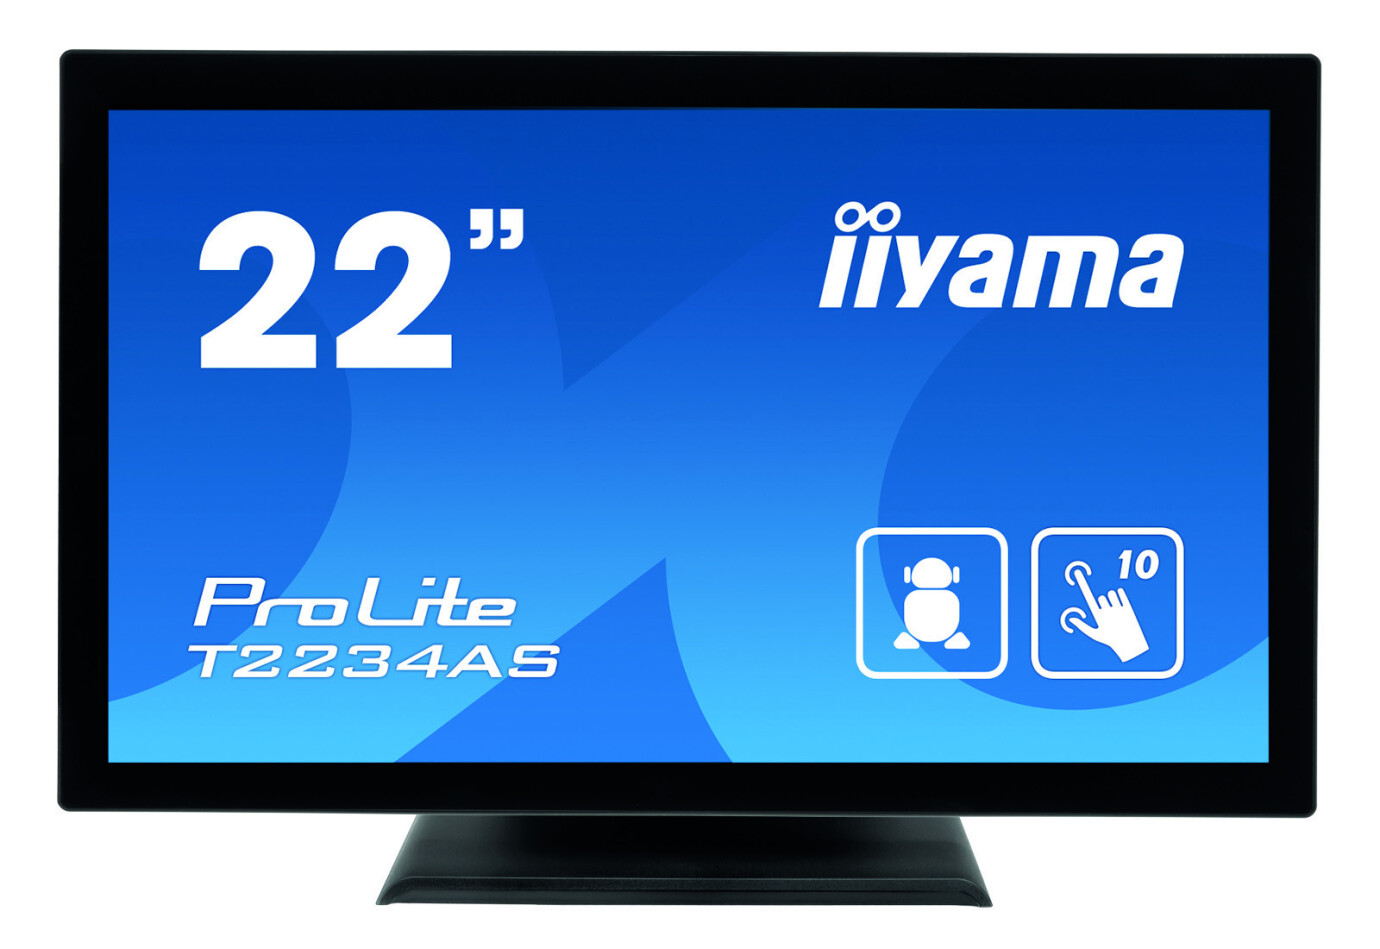 Iiyama PROLITE T2234AS-B1 22'' interaktives Touch Display mit Full HD Auflösung